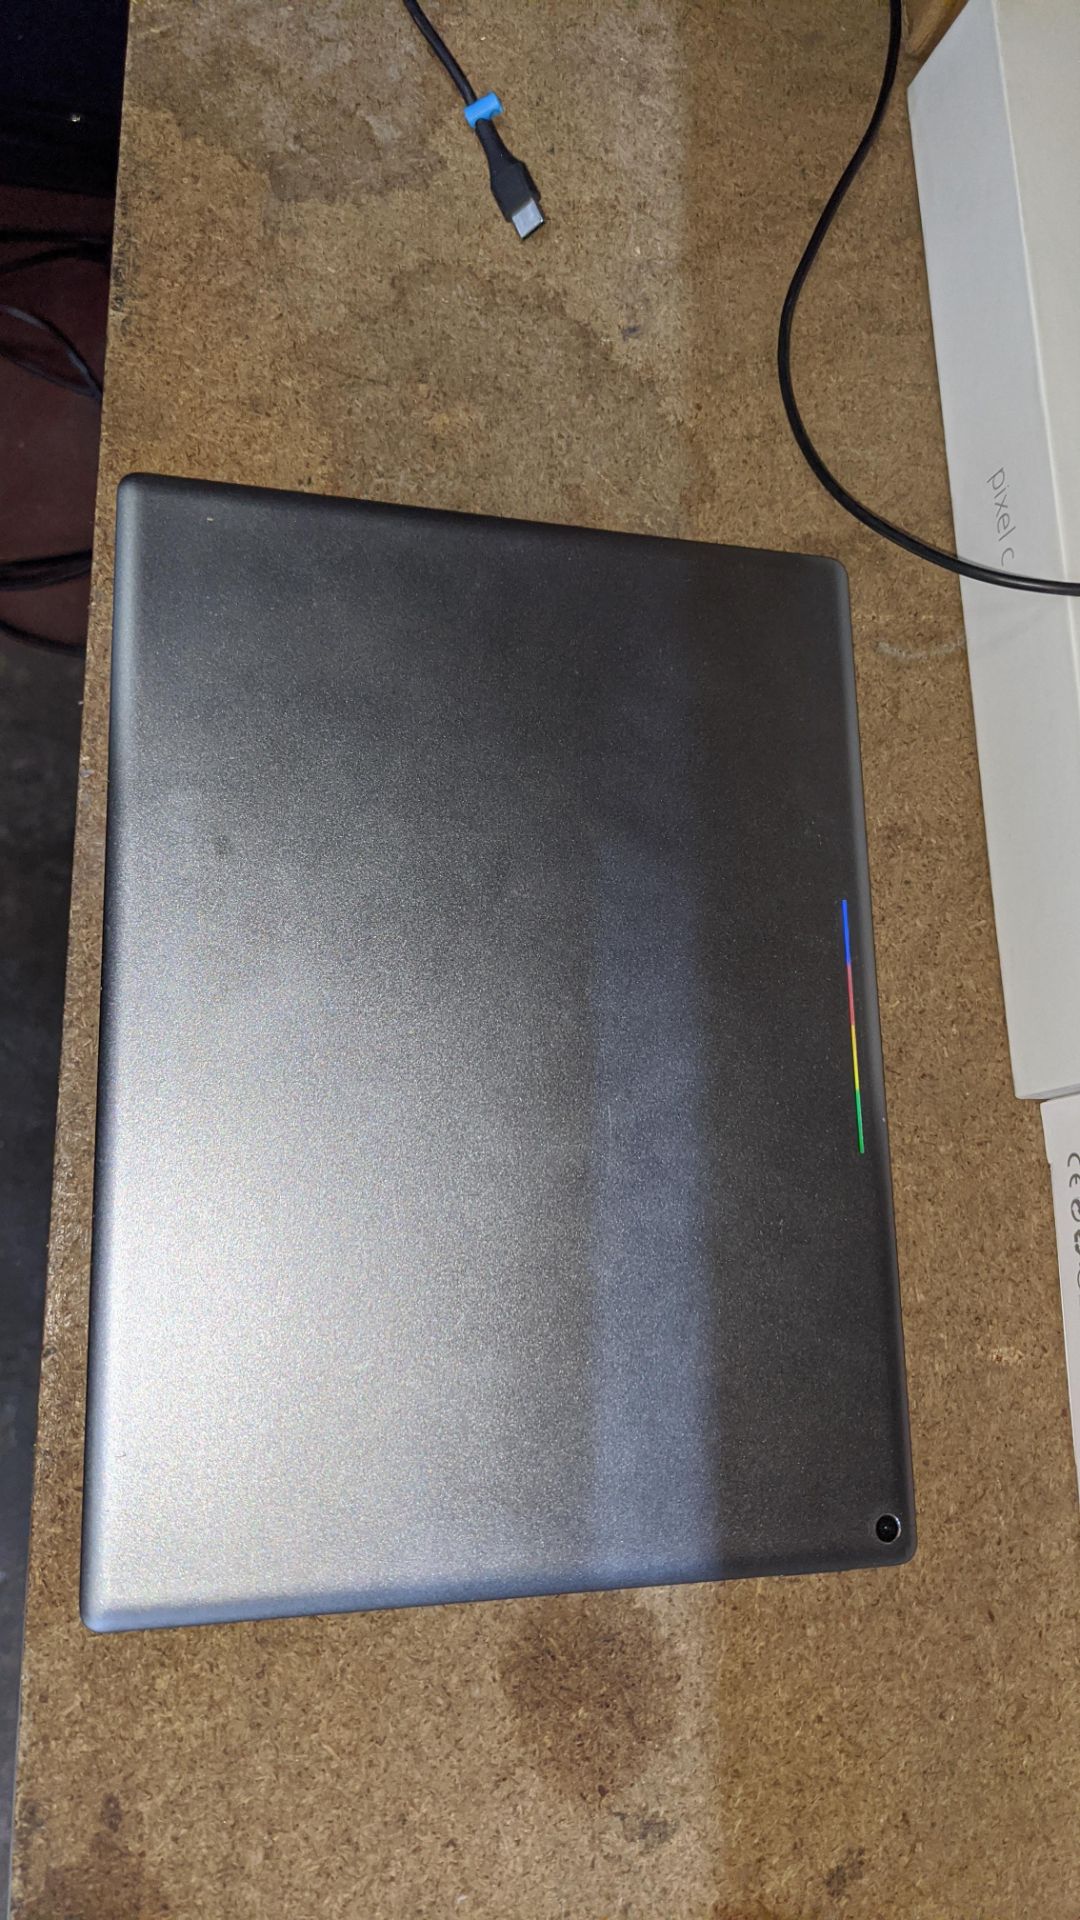 Google Pixel C 64GB tablet, 10.2", model C1502W, with optional Folio keyboard/case model UG1B. Incl - Image 12 of 25